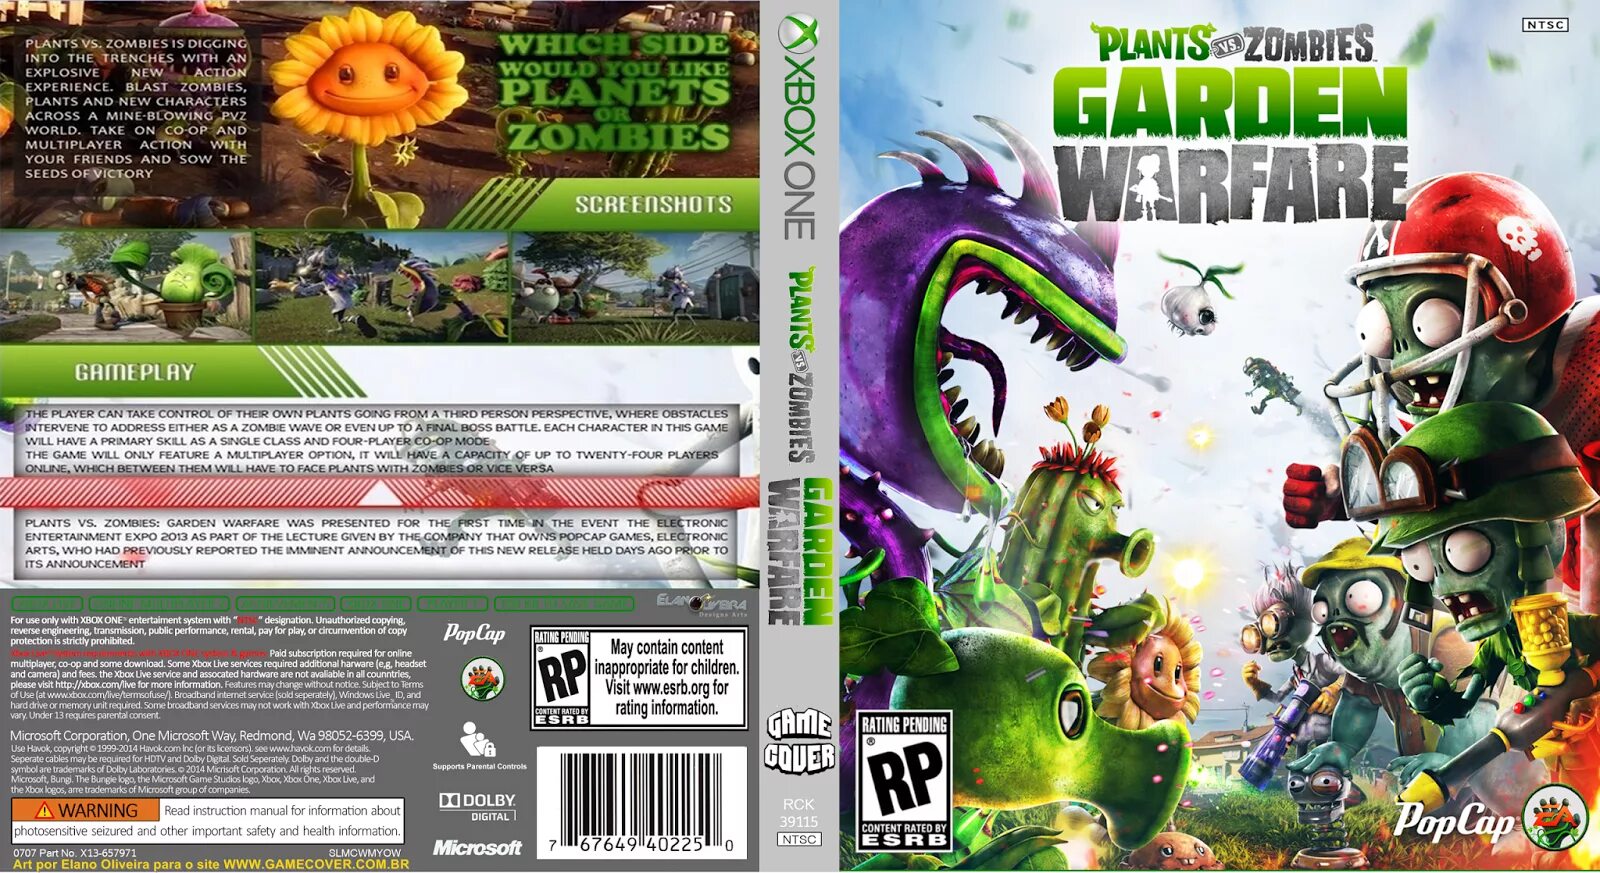 Popcap plants. Plants vs Zombies Garden Warfare 2 код. Plants vs Zombies диск игры. Системные требования растения против зомби Garden Warfare.